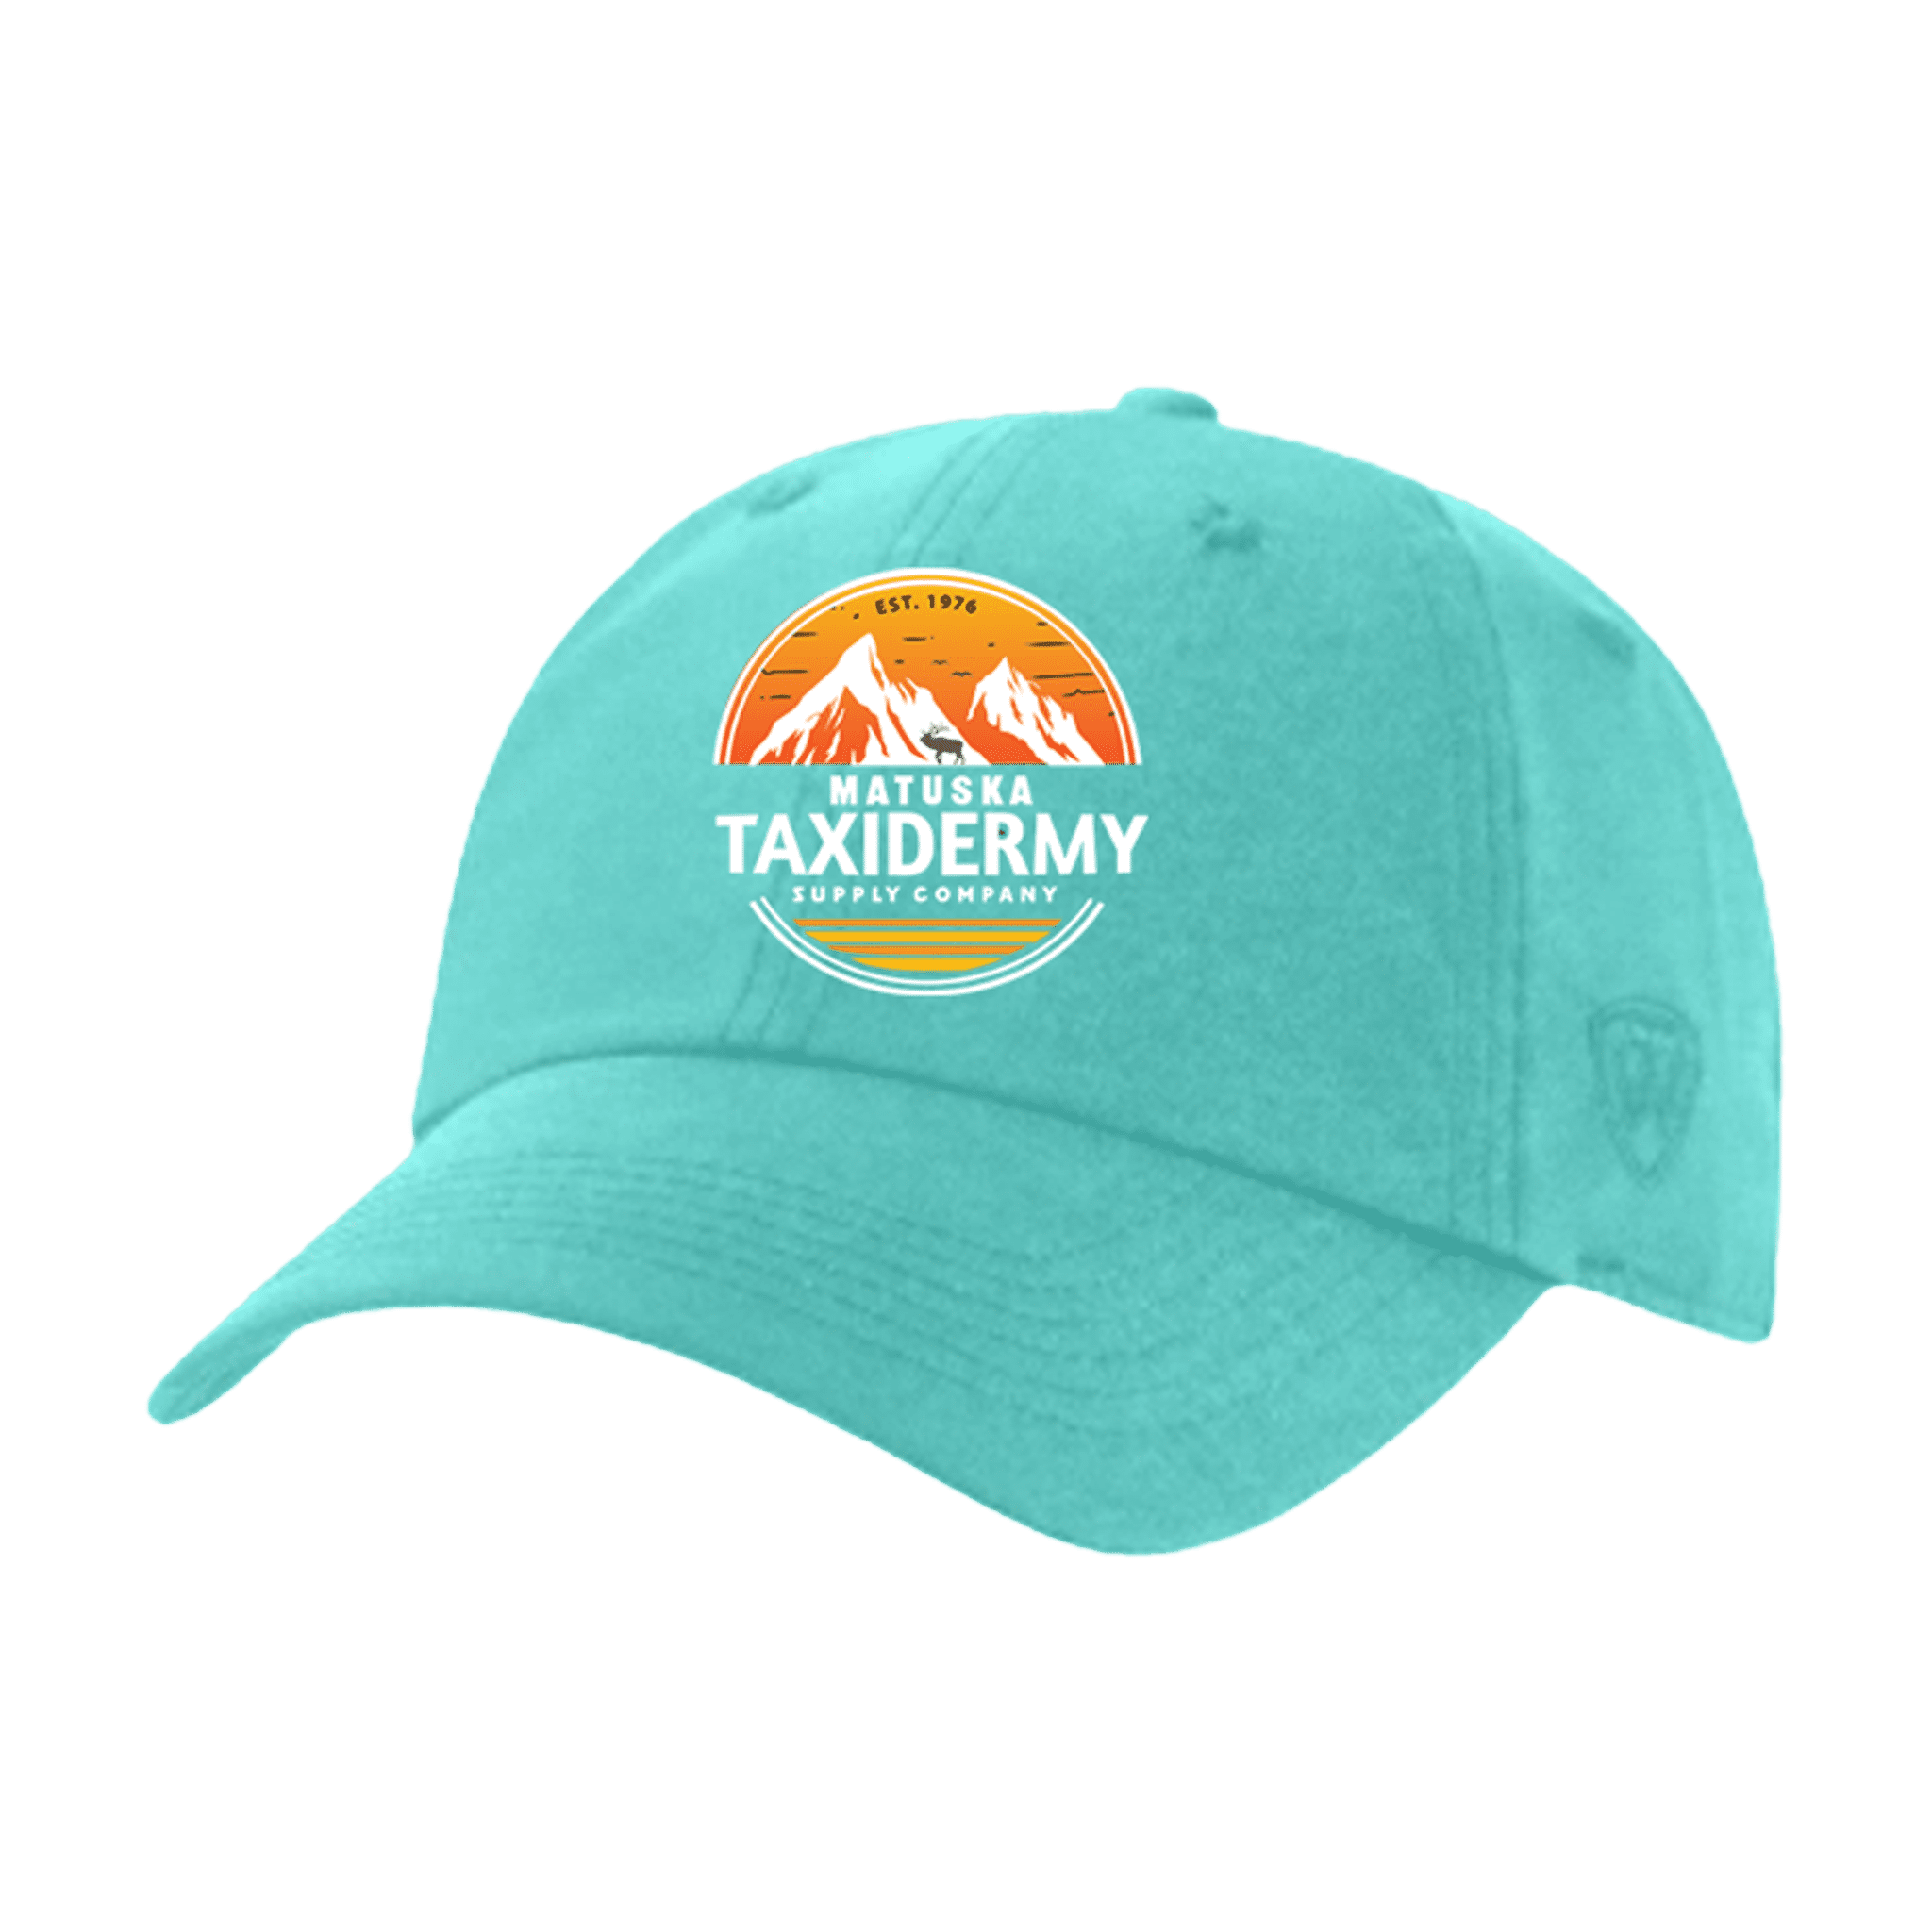 Teal Blue Hat - Matuska Taxidermy Supply Company